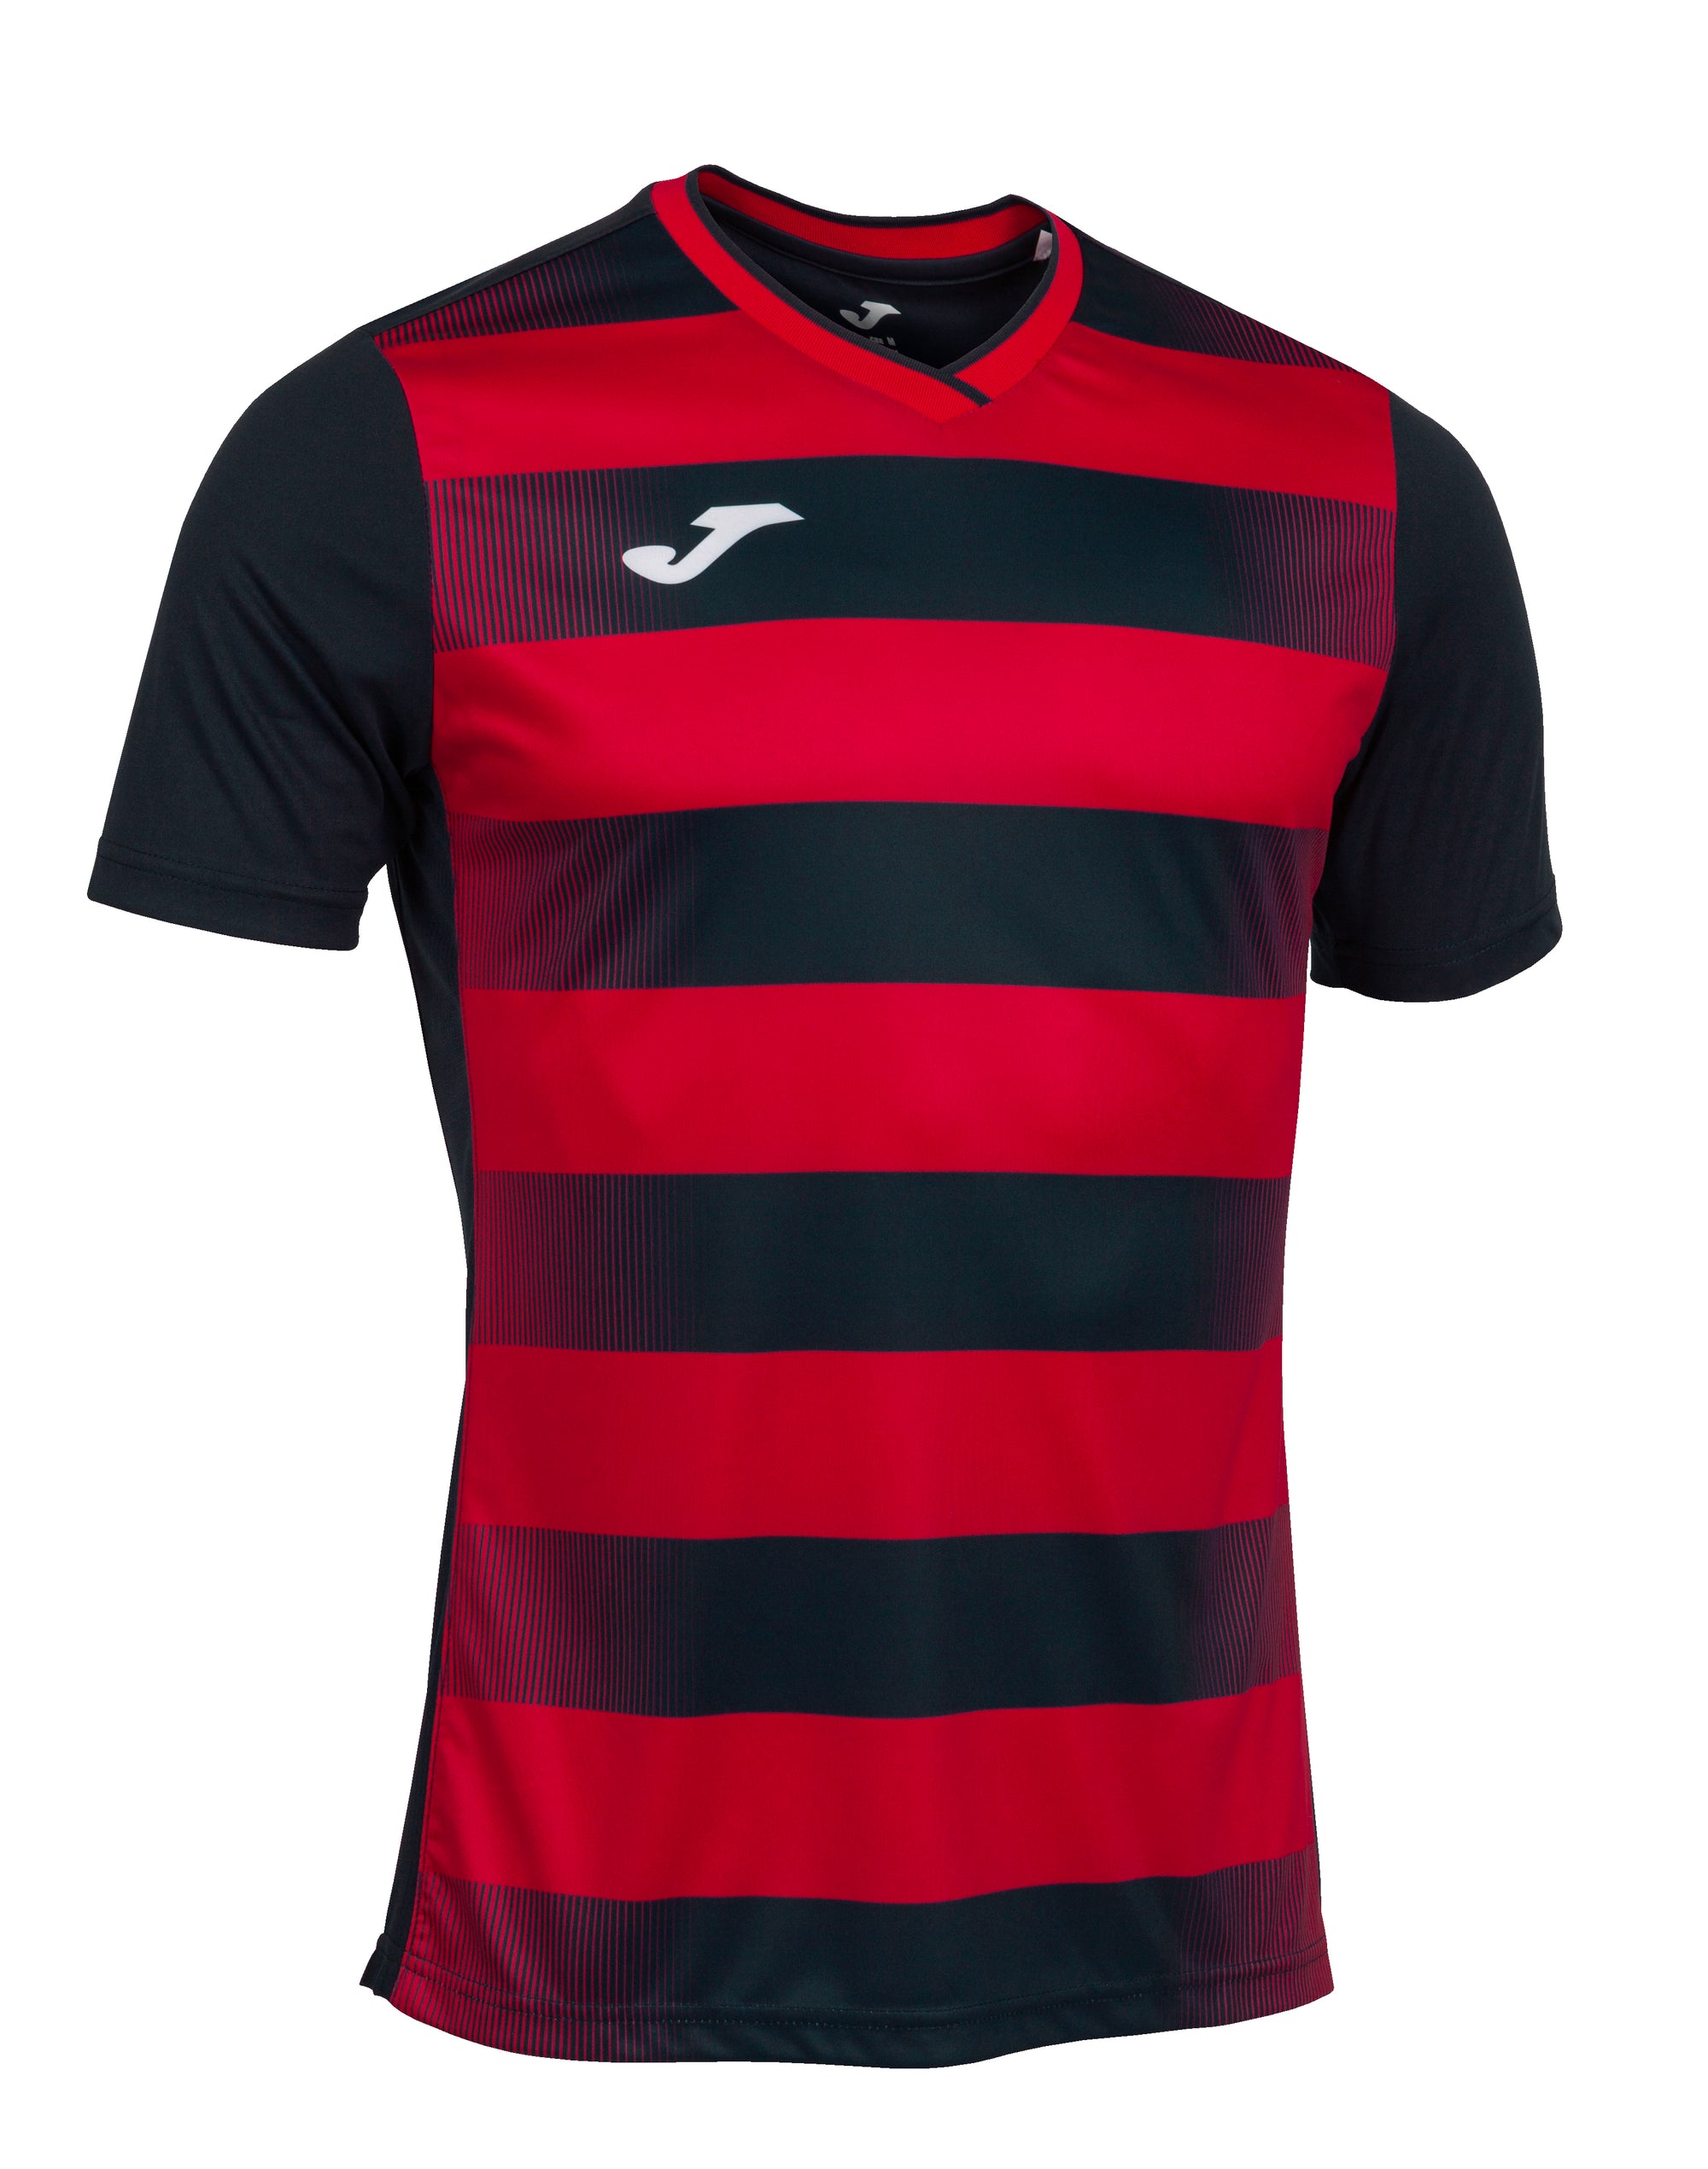 Joma Europa V Short Sleeve T-Shirt - Black/Red